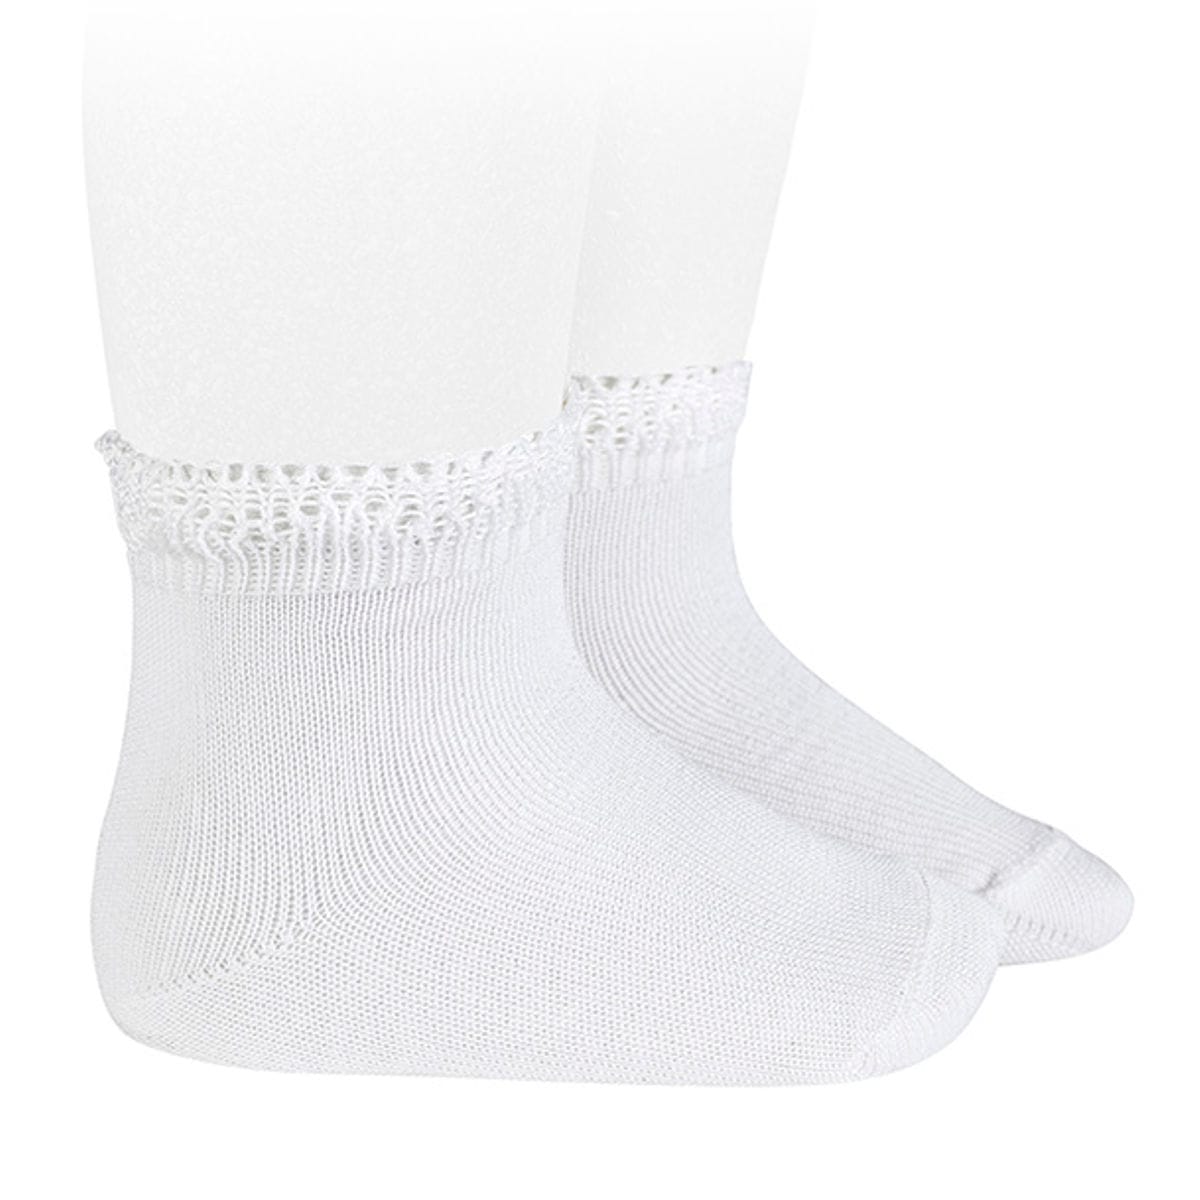 C condor Short Socks With Open Work Cuff 3΁`4 i Rh qpC LbY \bNX  v qǂpC  LbY\bNX  XyC j y200Blancoi3΁]4΁jz